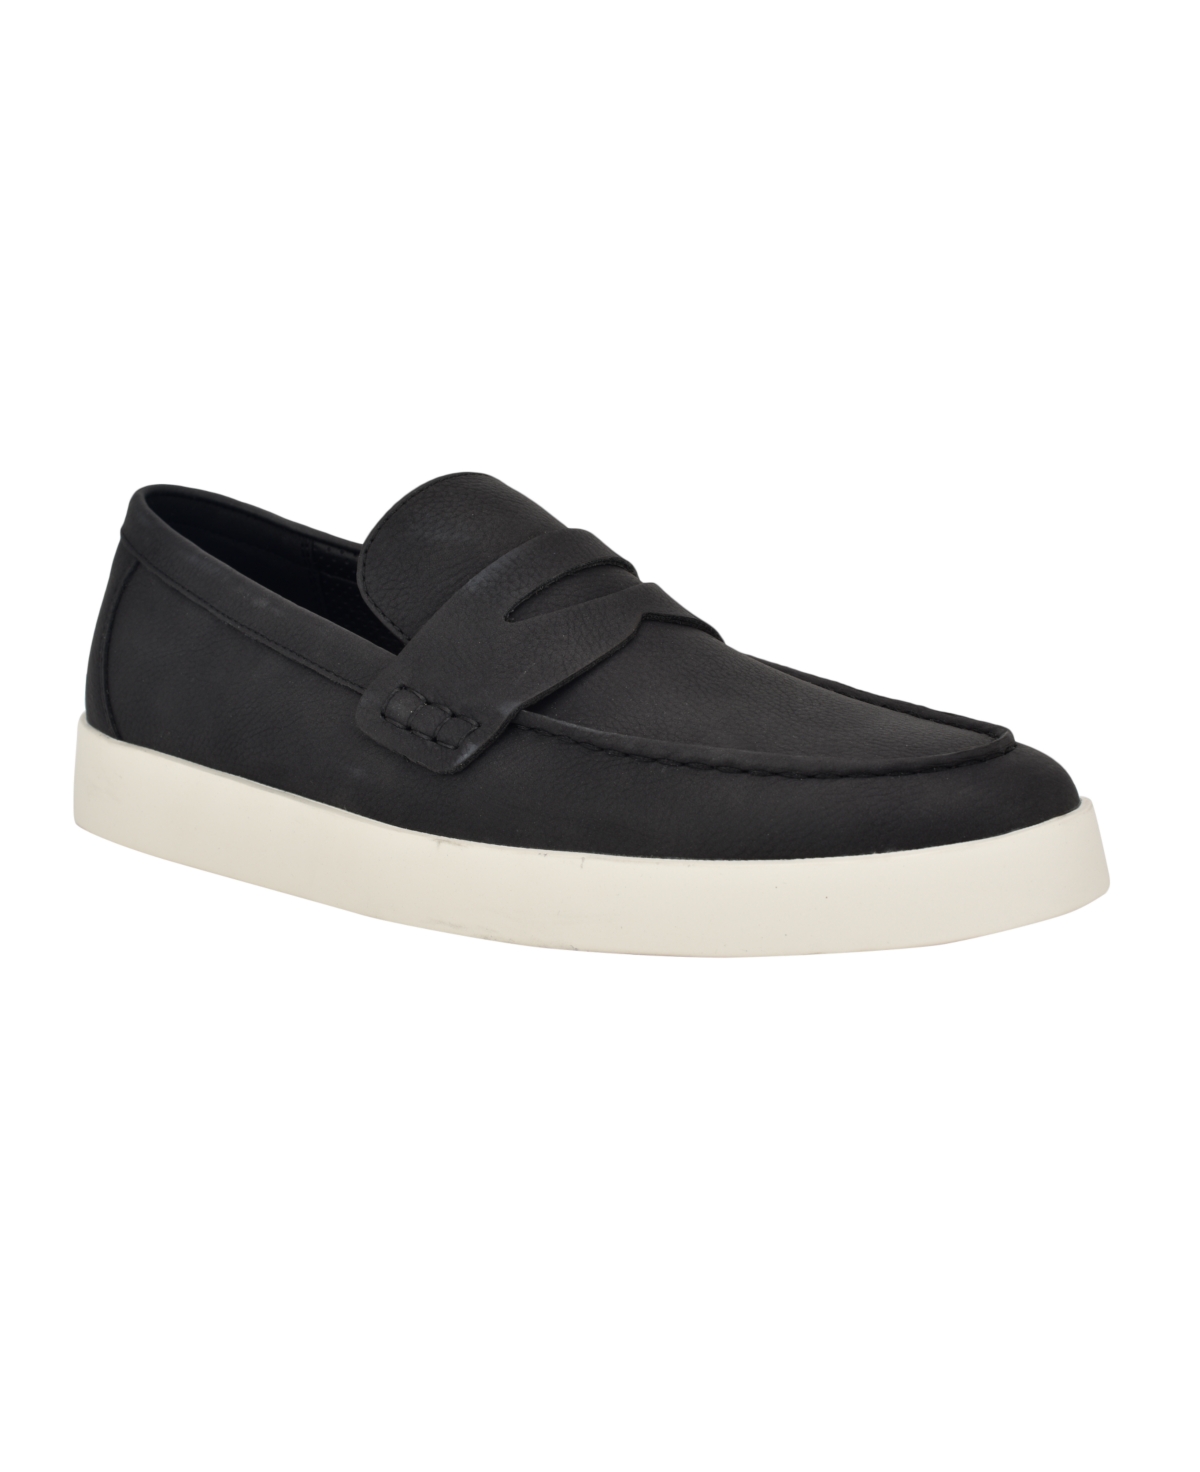 Men's Ellard Casual Slip-On Loafers - Black